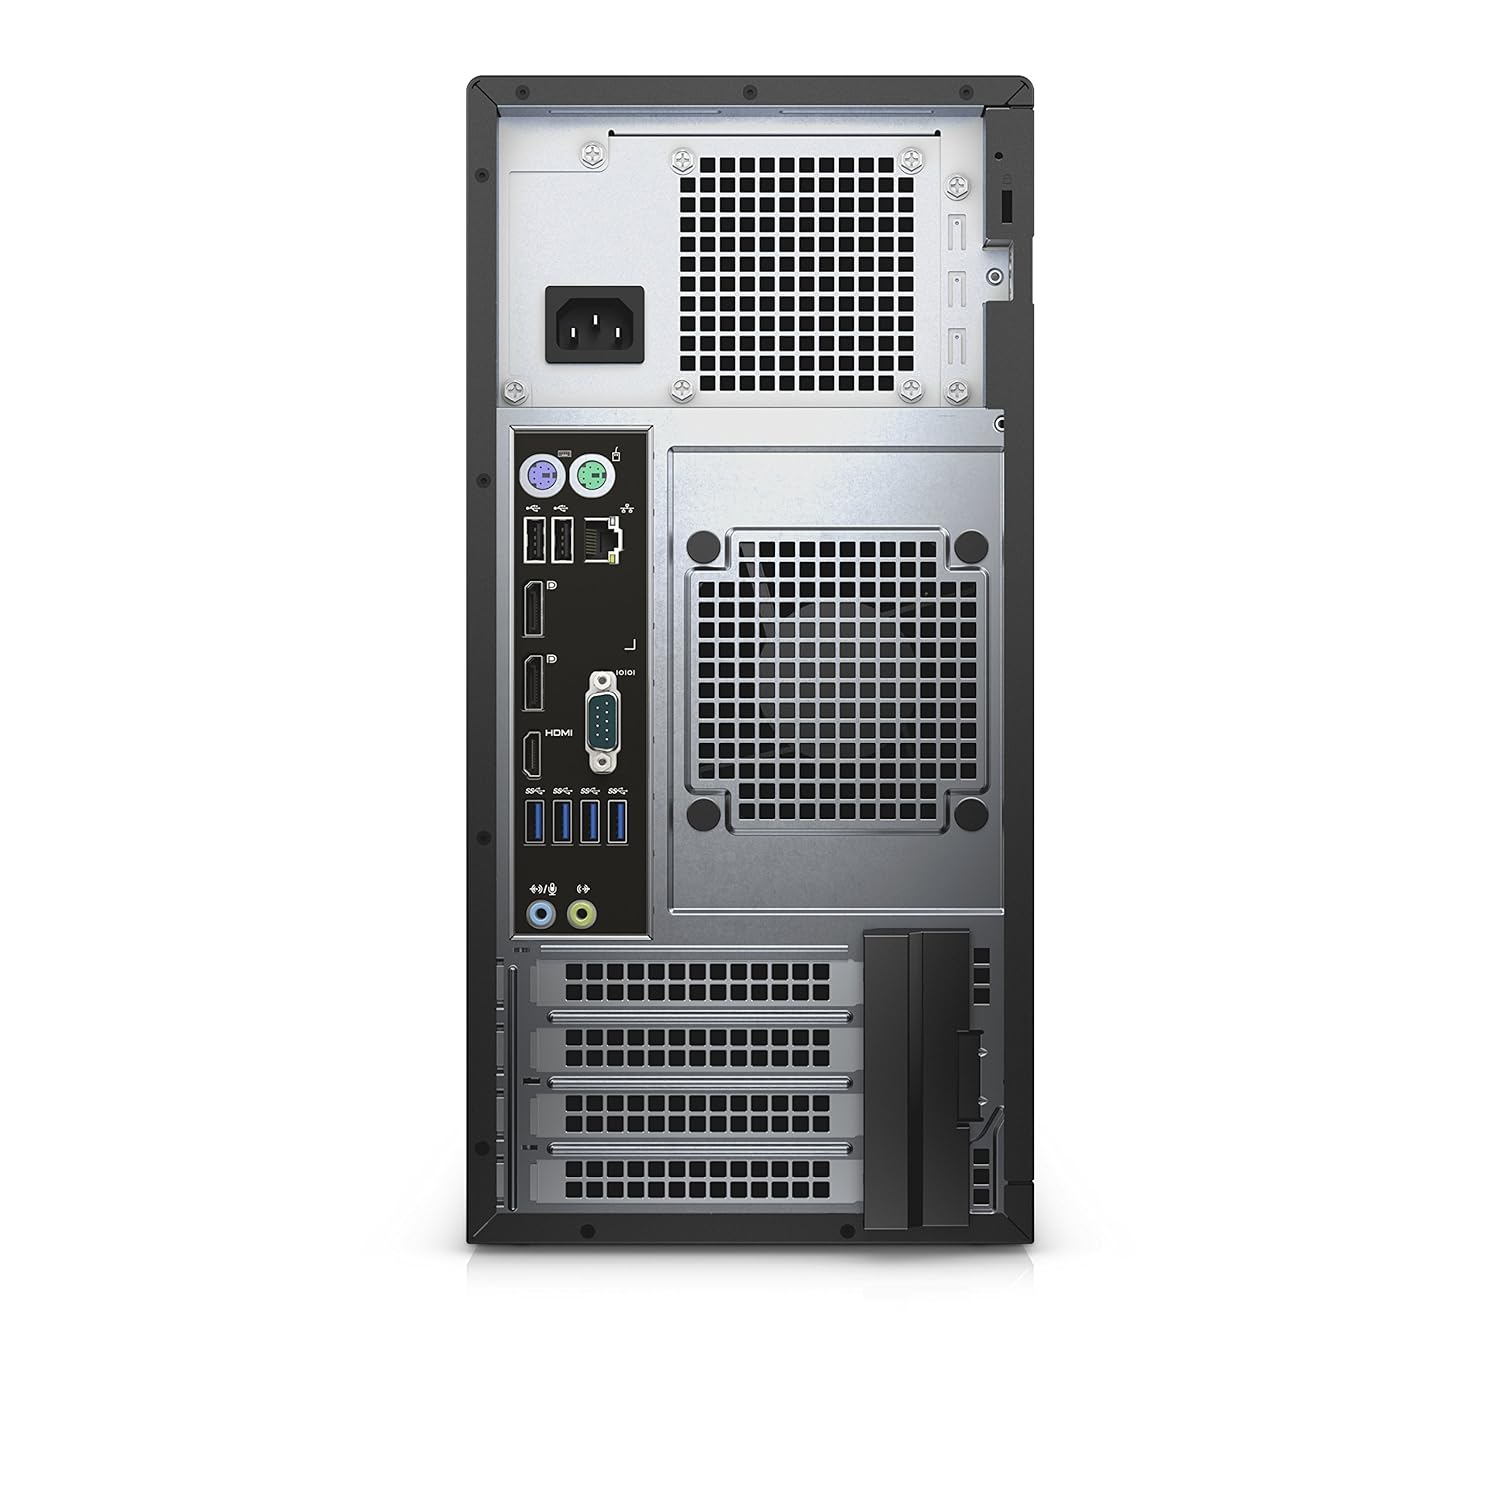 Dell Precision T3620 Tower Gaming Desktop Computer PC| Intel Core i7 - (6700) 6th Gen| 16GB - 32GB DDR4 RAM| 512GB -2TB SSD| Windows 10 Pro| RX550, GT1030, GTX 1630, 1050Ti, 1650 - Refurbished